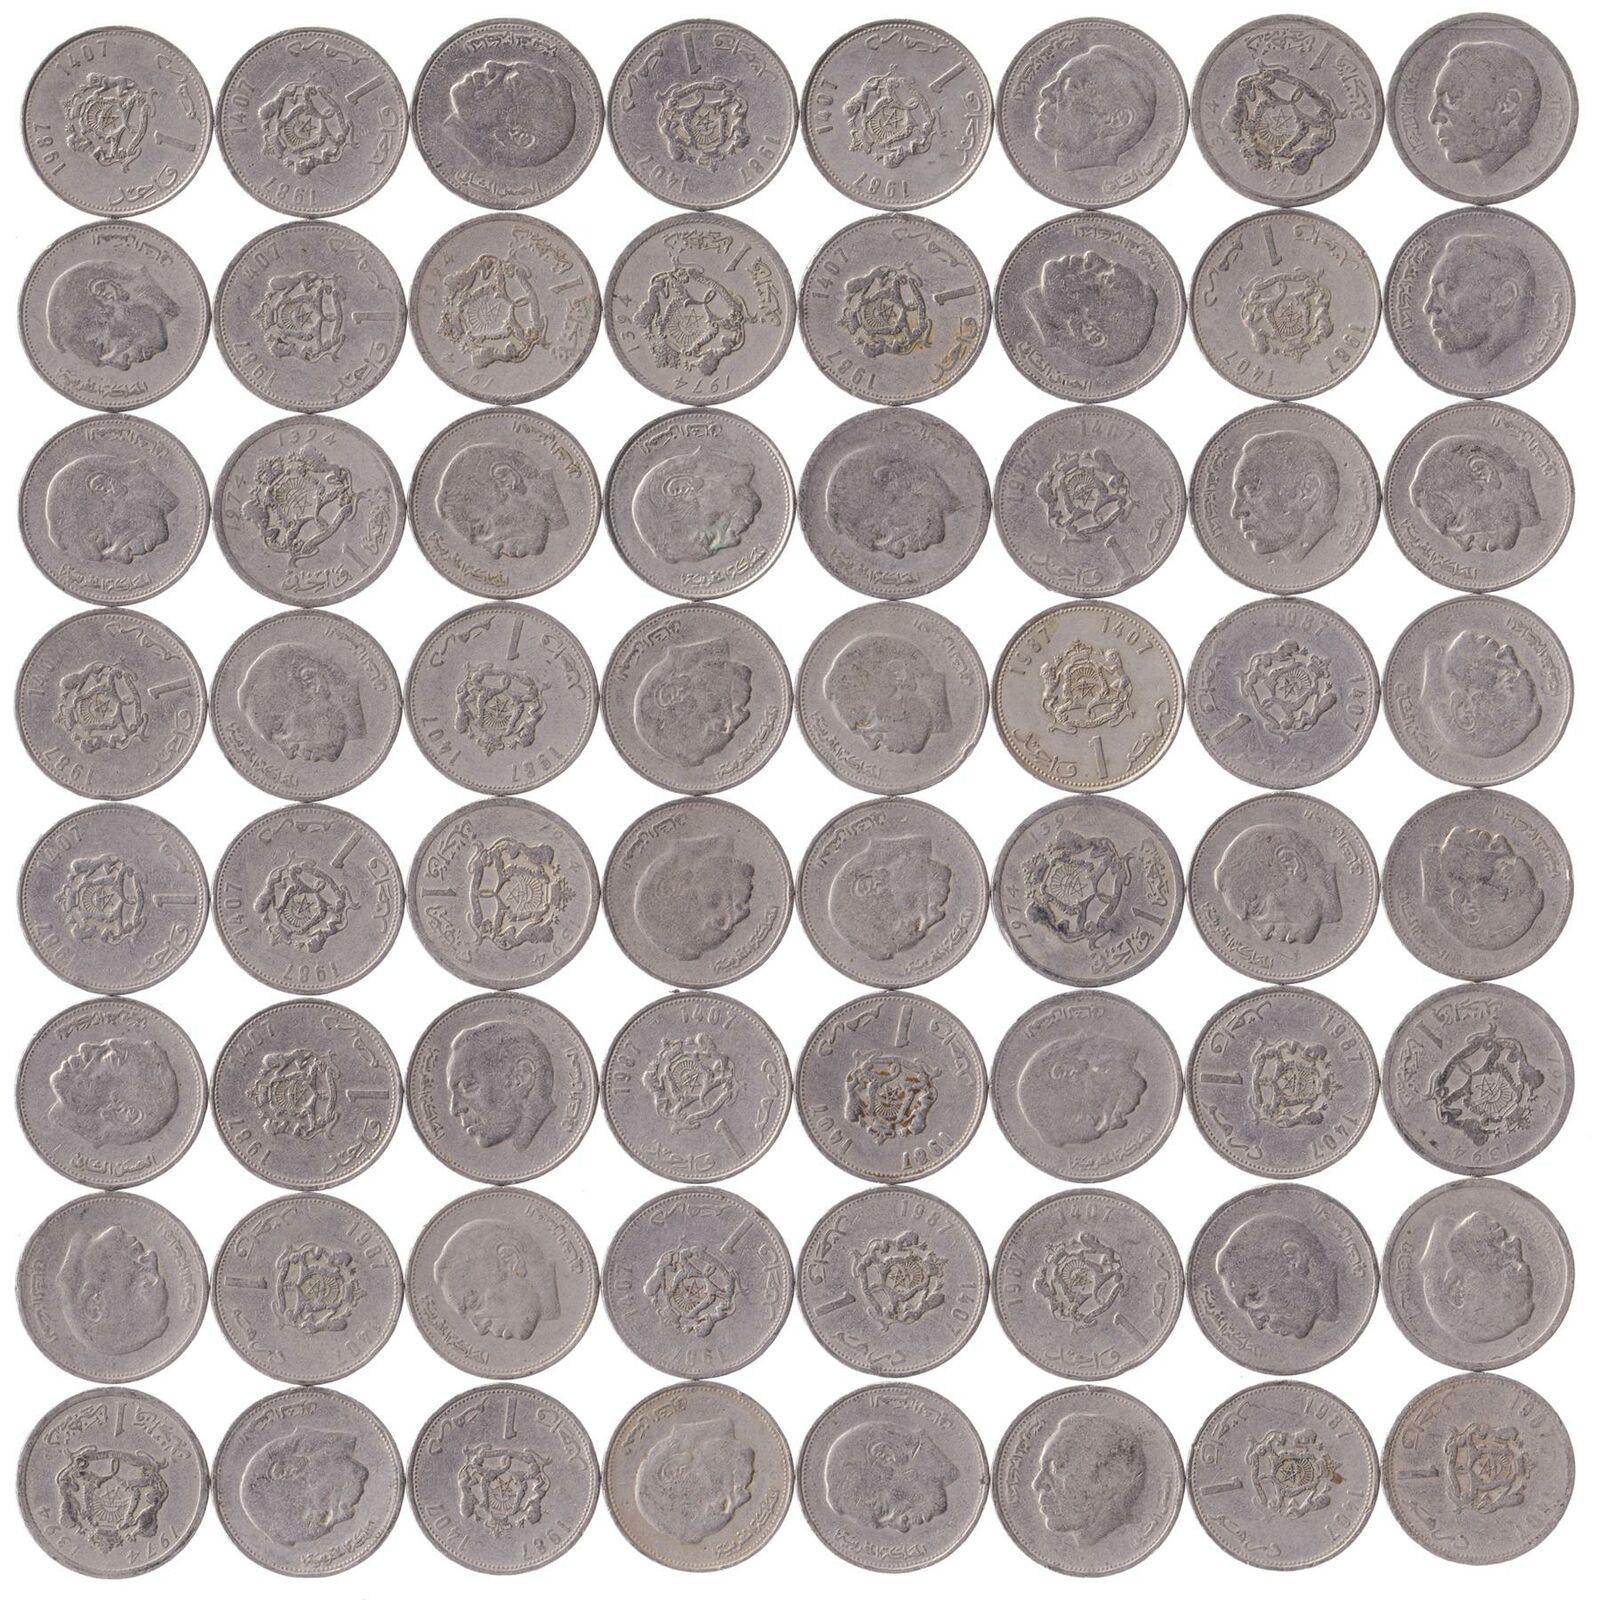 Morocco 1 Dirham | 100 Coins | Hassan Ii 3rd | Y88 | 1987